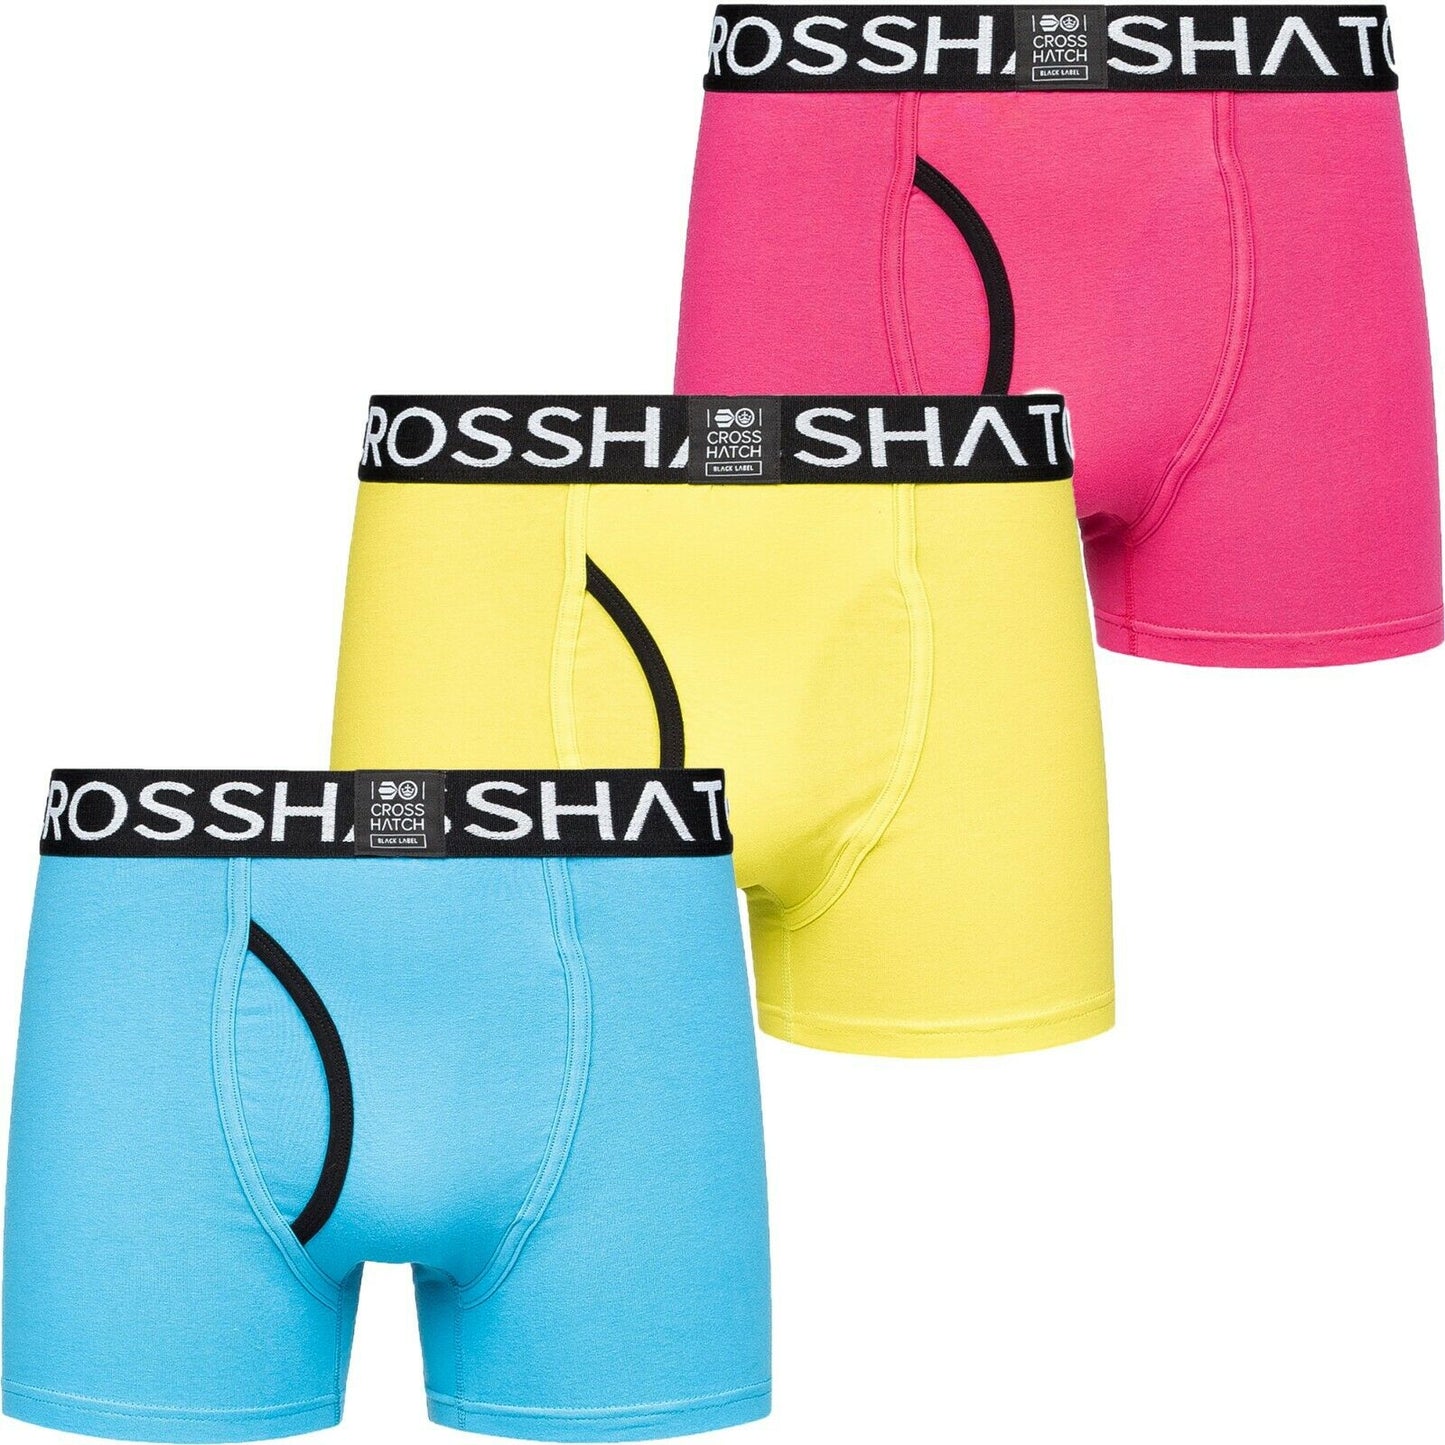 Crosshatch - Men's Multi Boxer Shorts 3 Pack